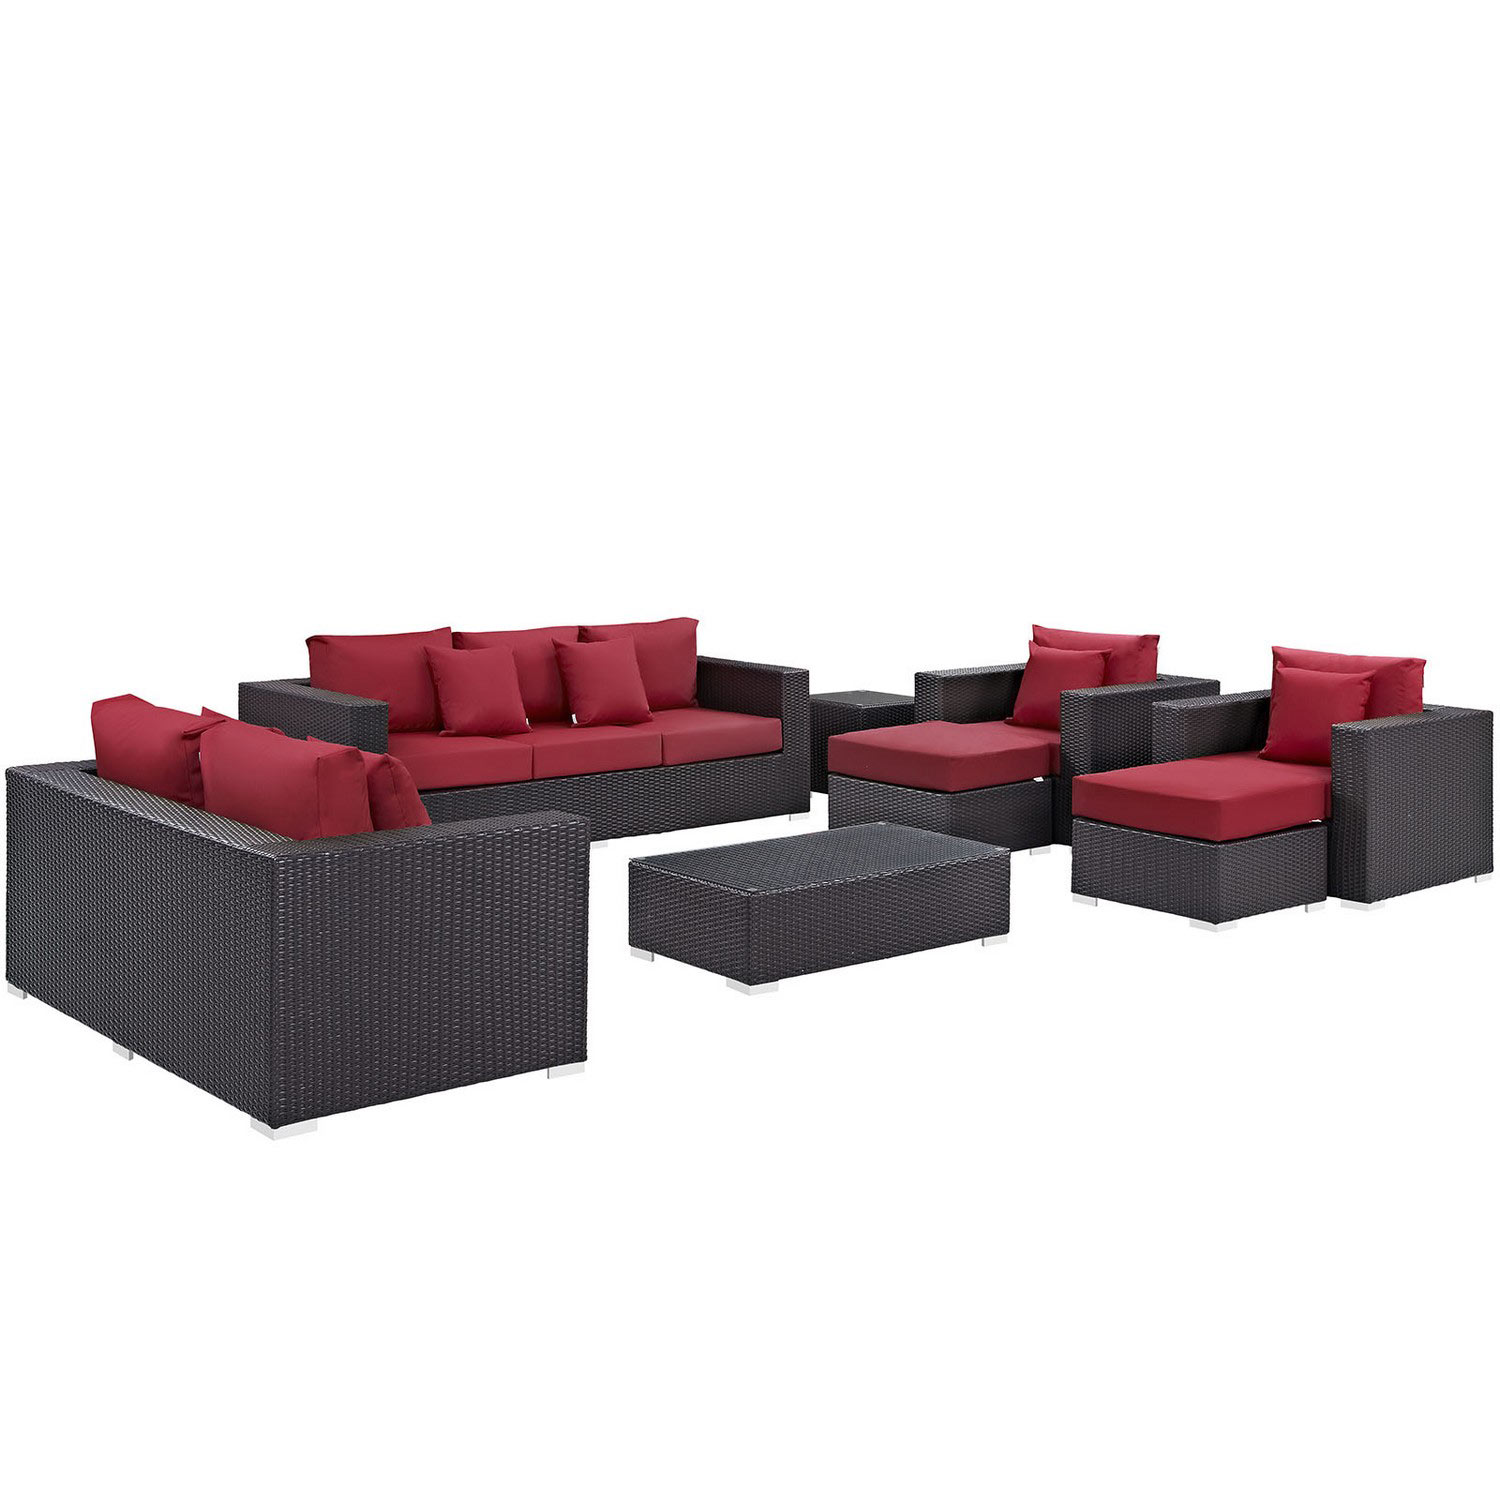 Modway Convene 9 Piece Outdoor Patio Sofa Set - Espresso Red